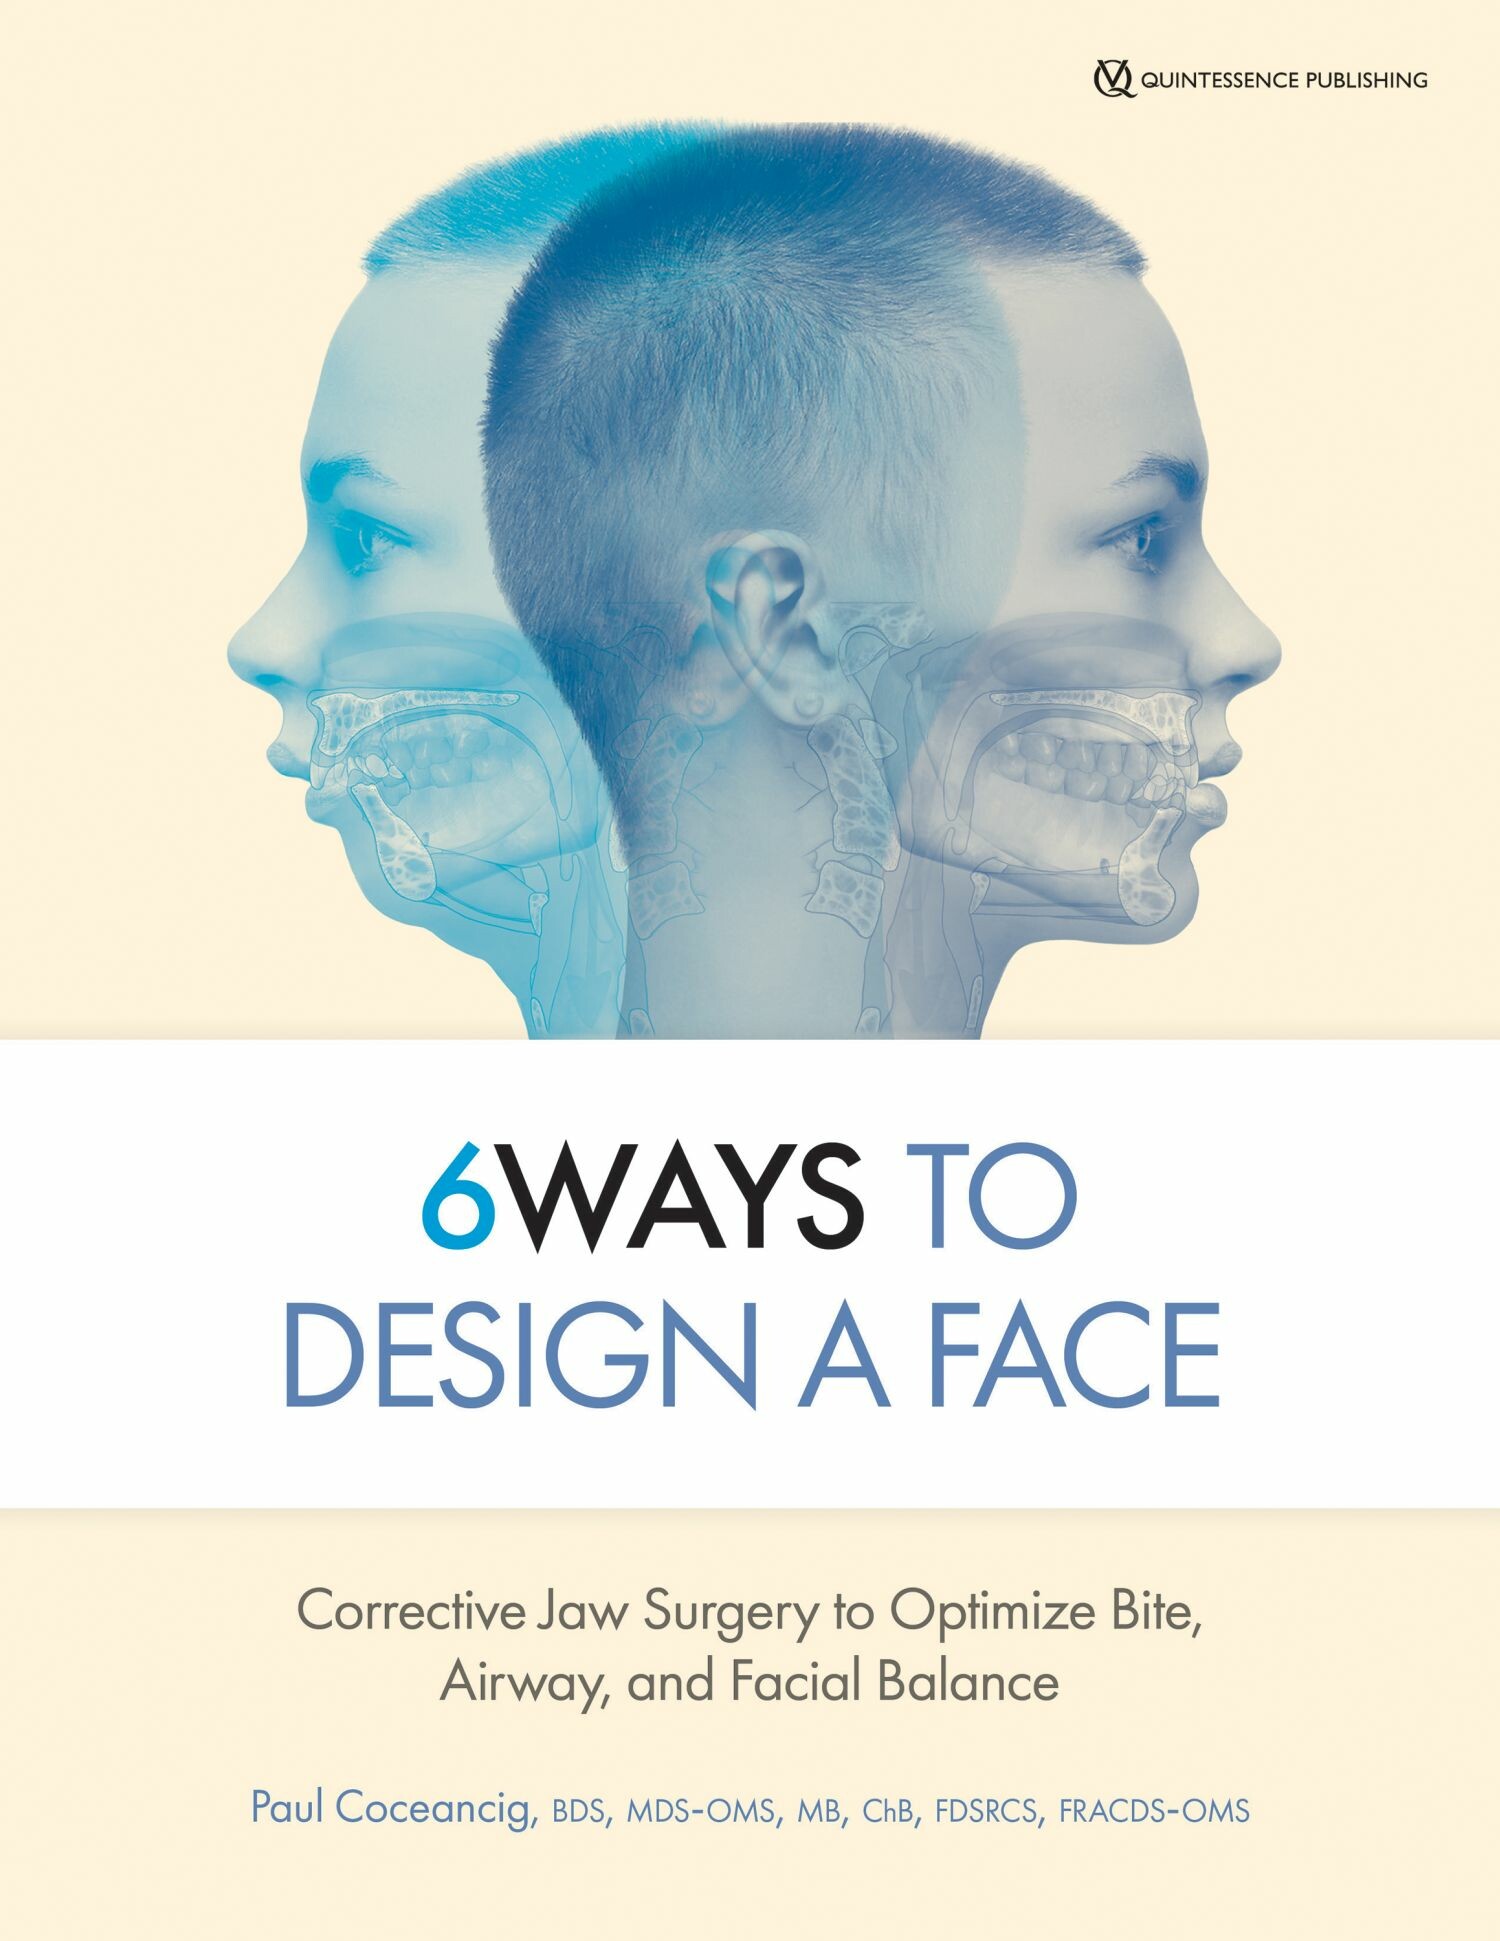 6Ways to Design a Face